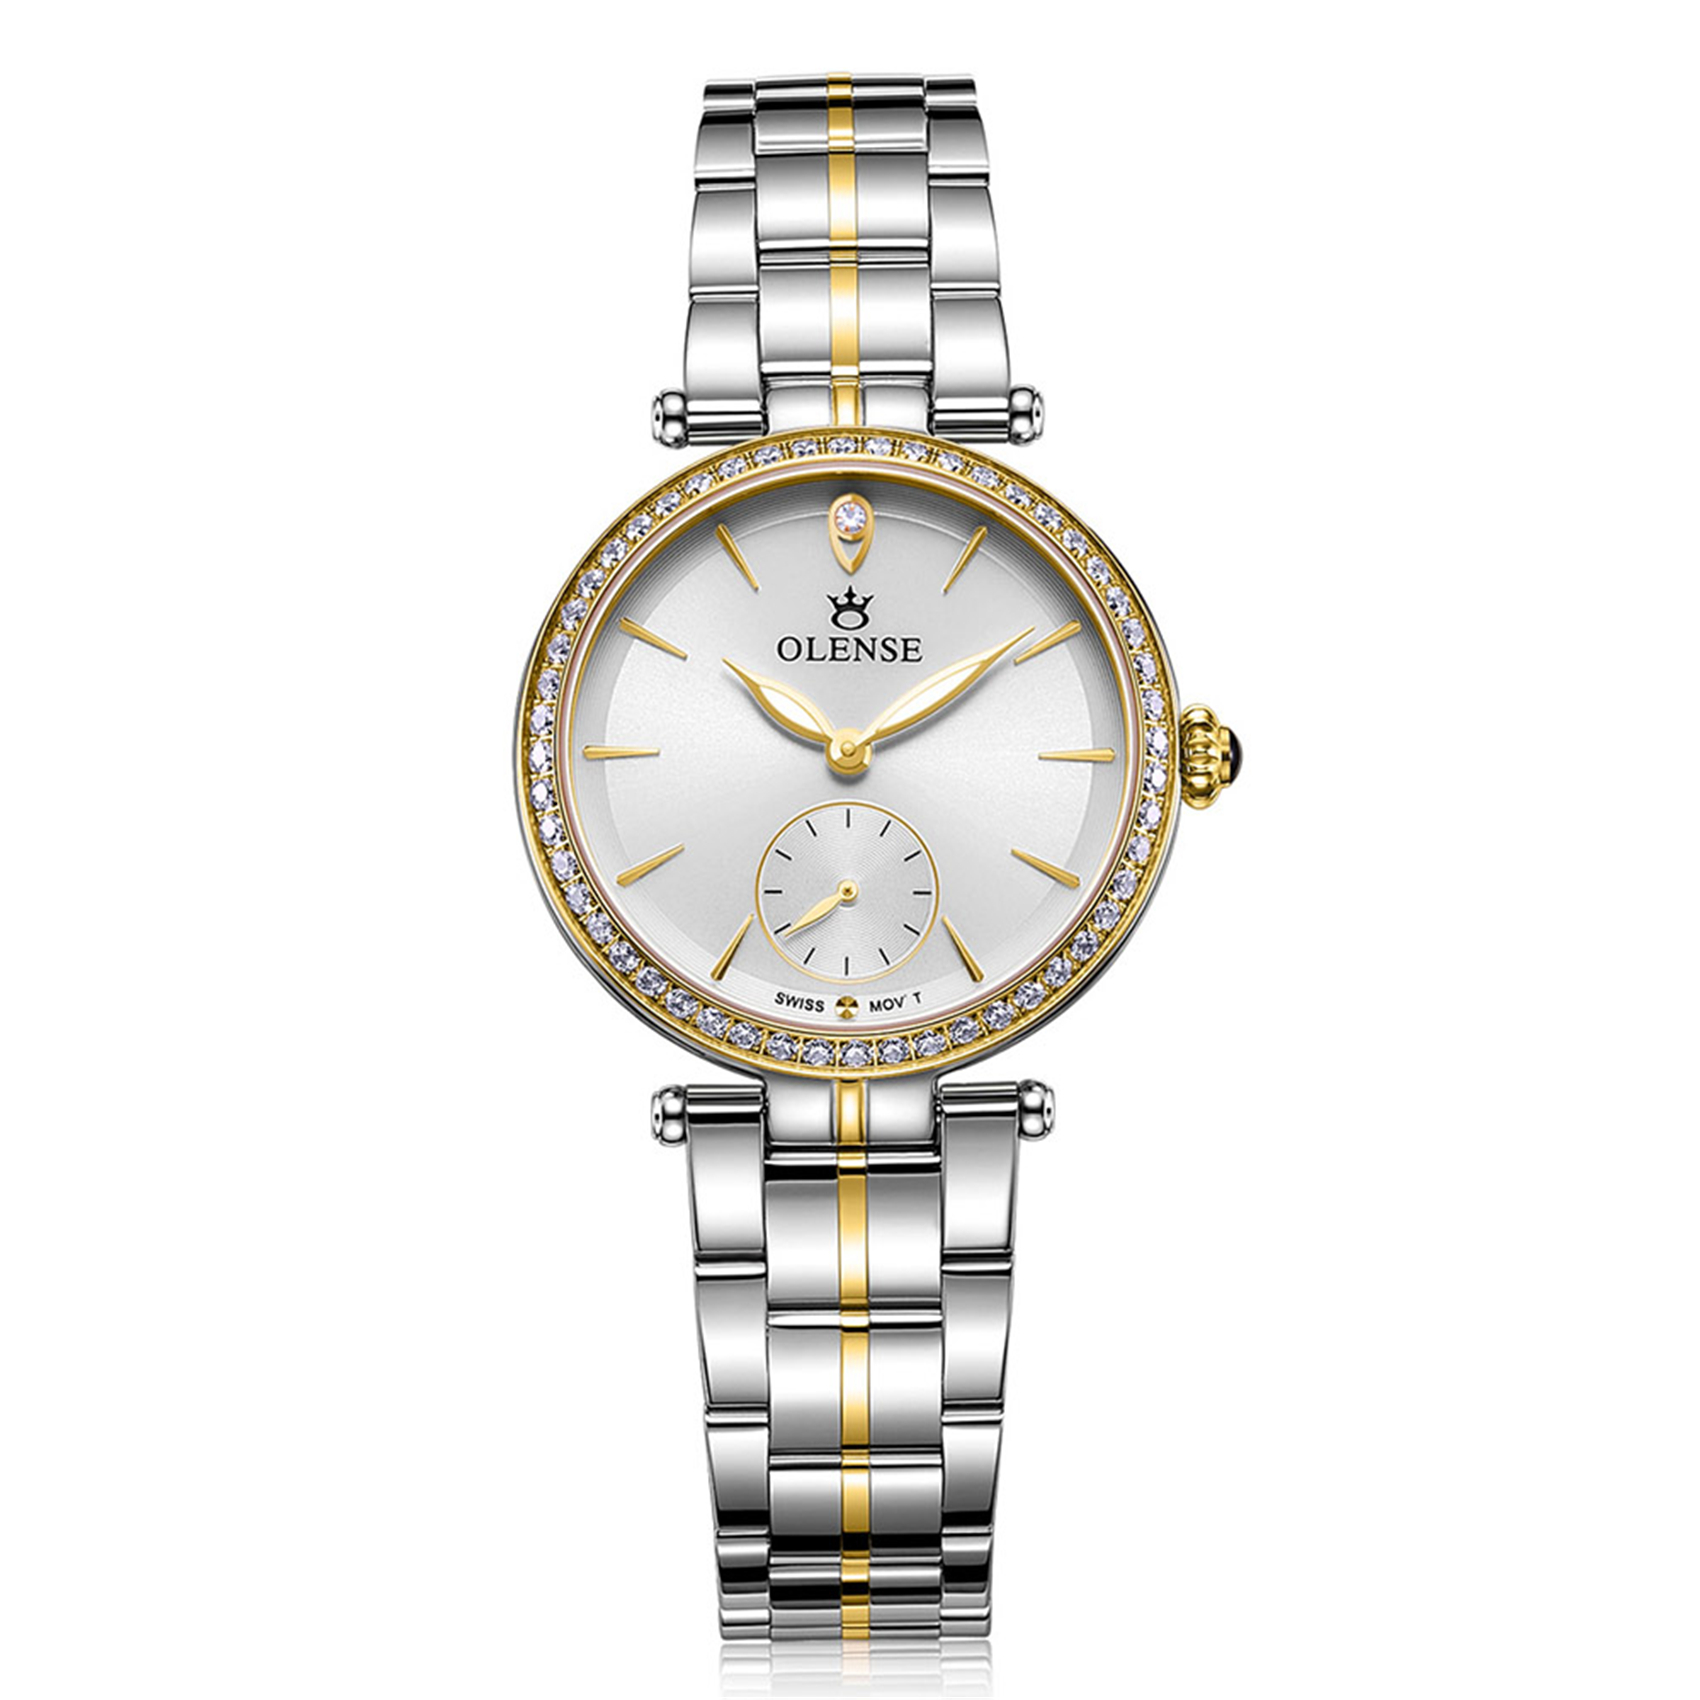 OLENSE - Luxury Ladies Watch, Stainless Steel, 30.5mm, Silver & Gold